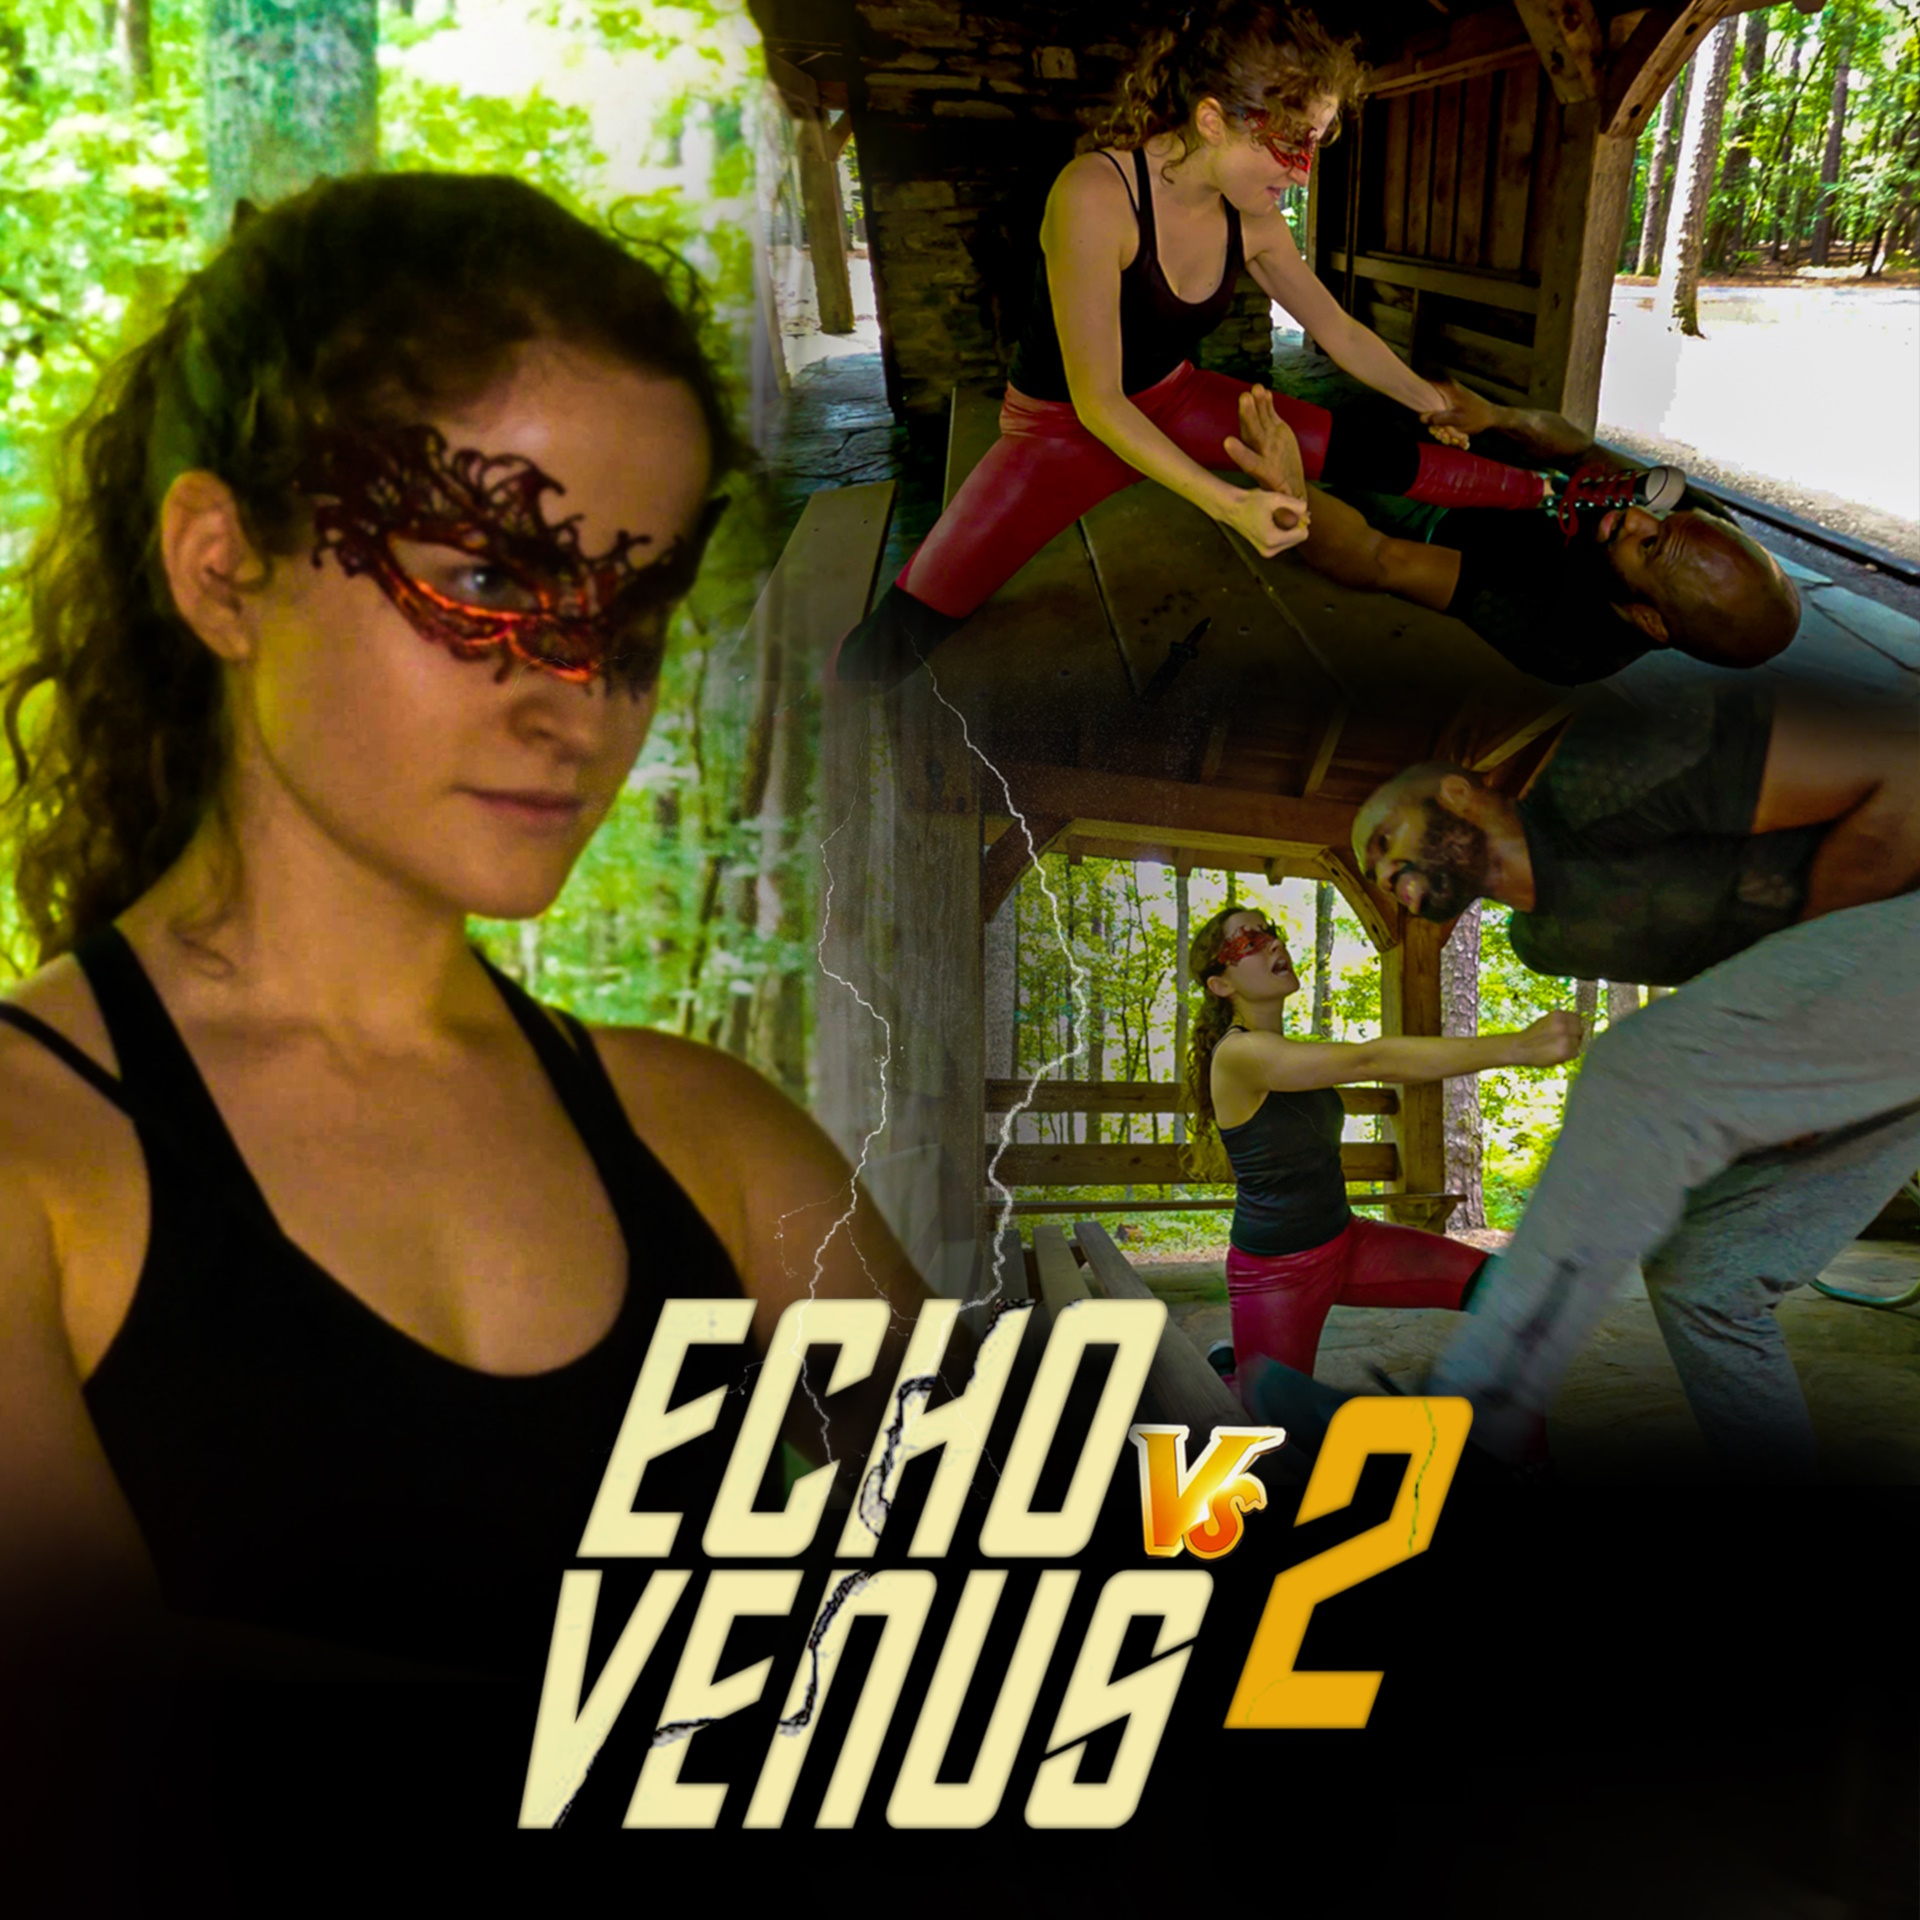 #5 - Echo vs. Venus 2: The Bounty